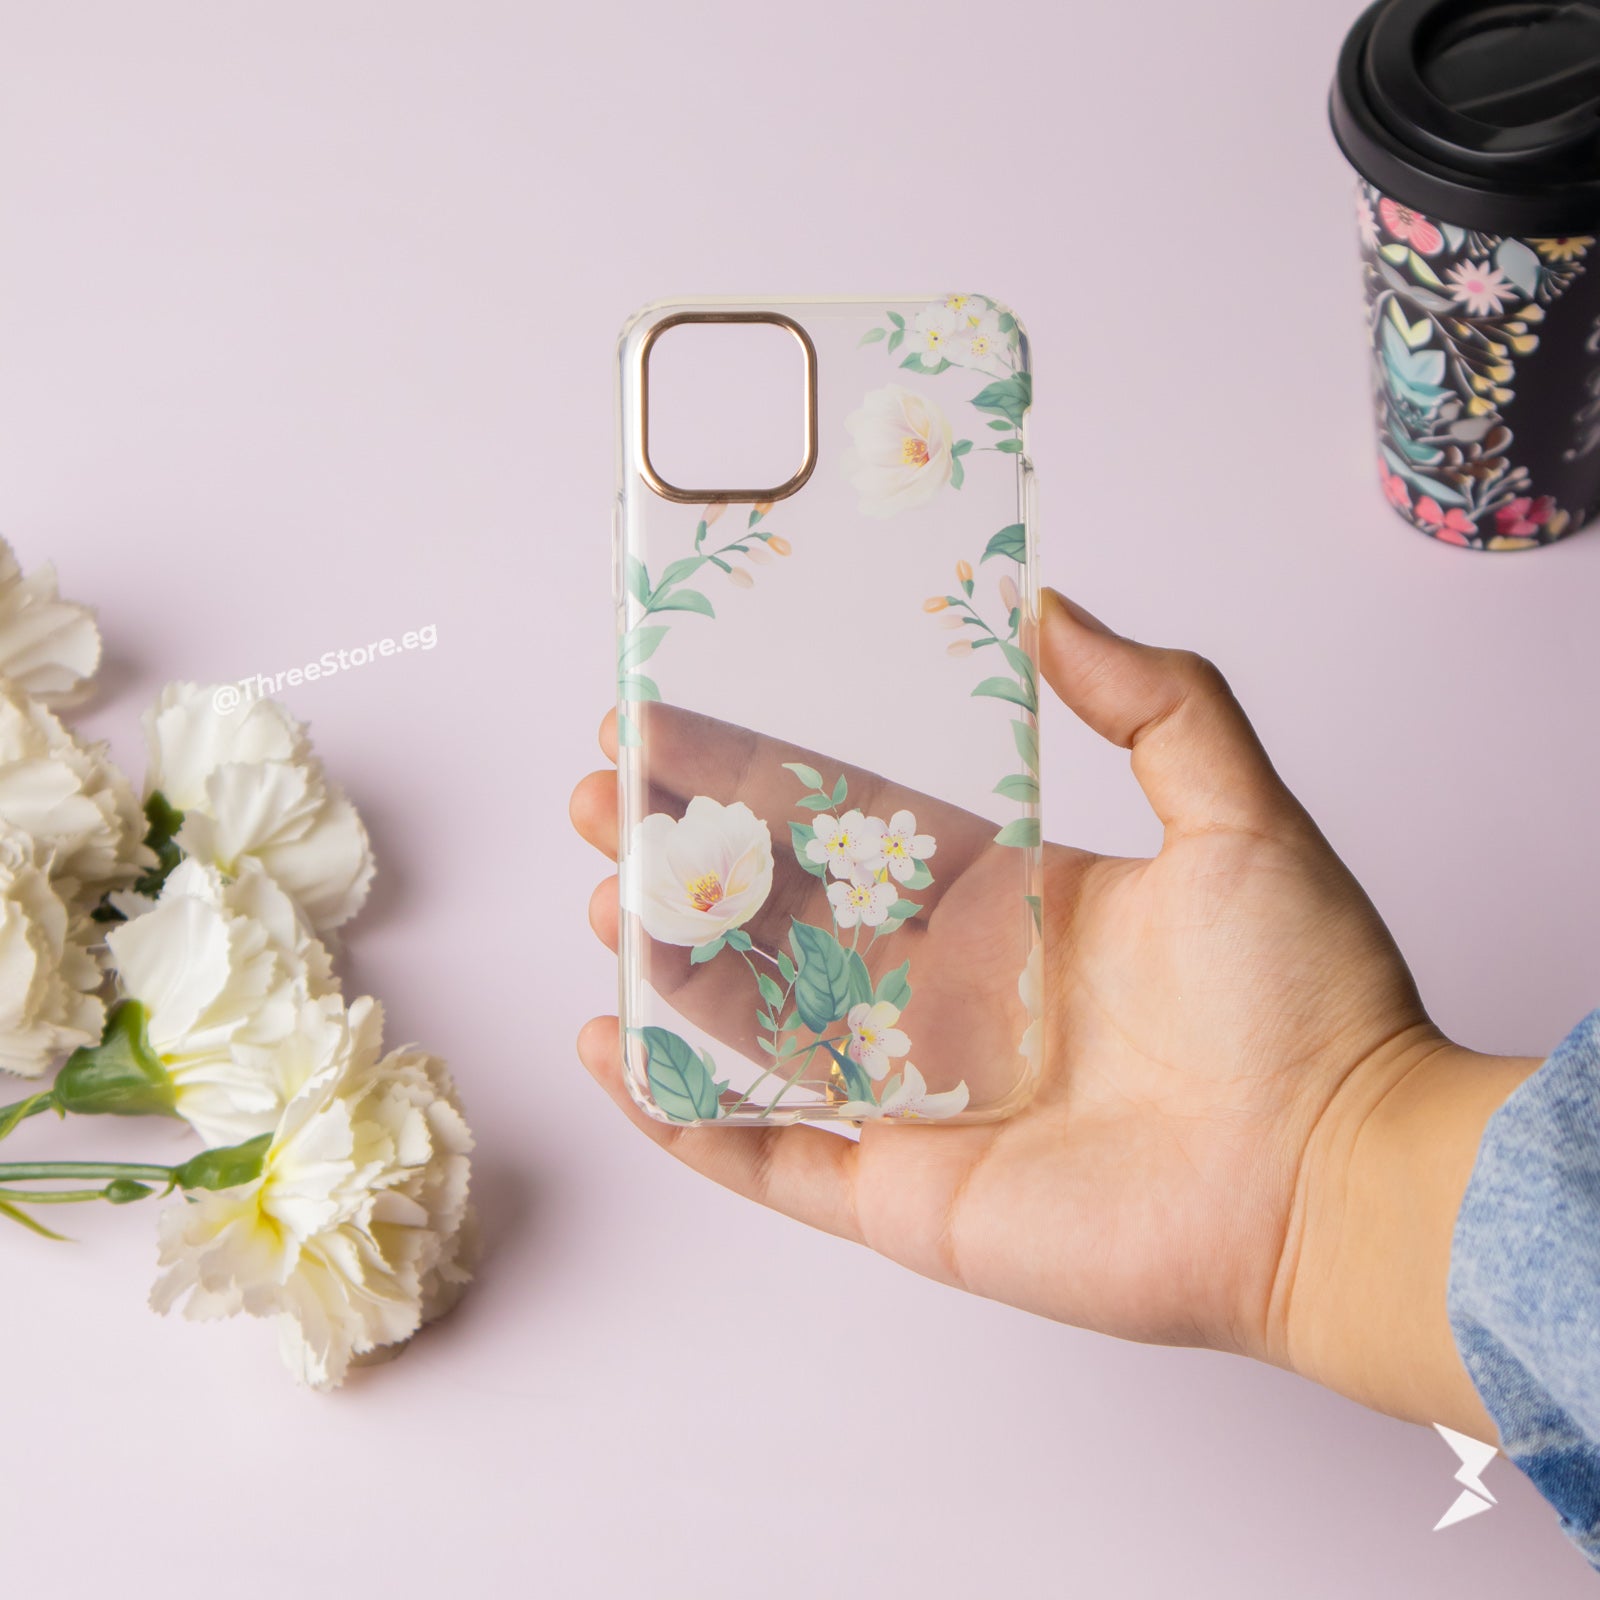 Qy Yang Flower Case iPhone 11 Pro